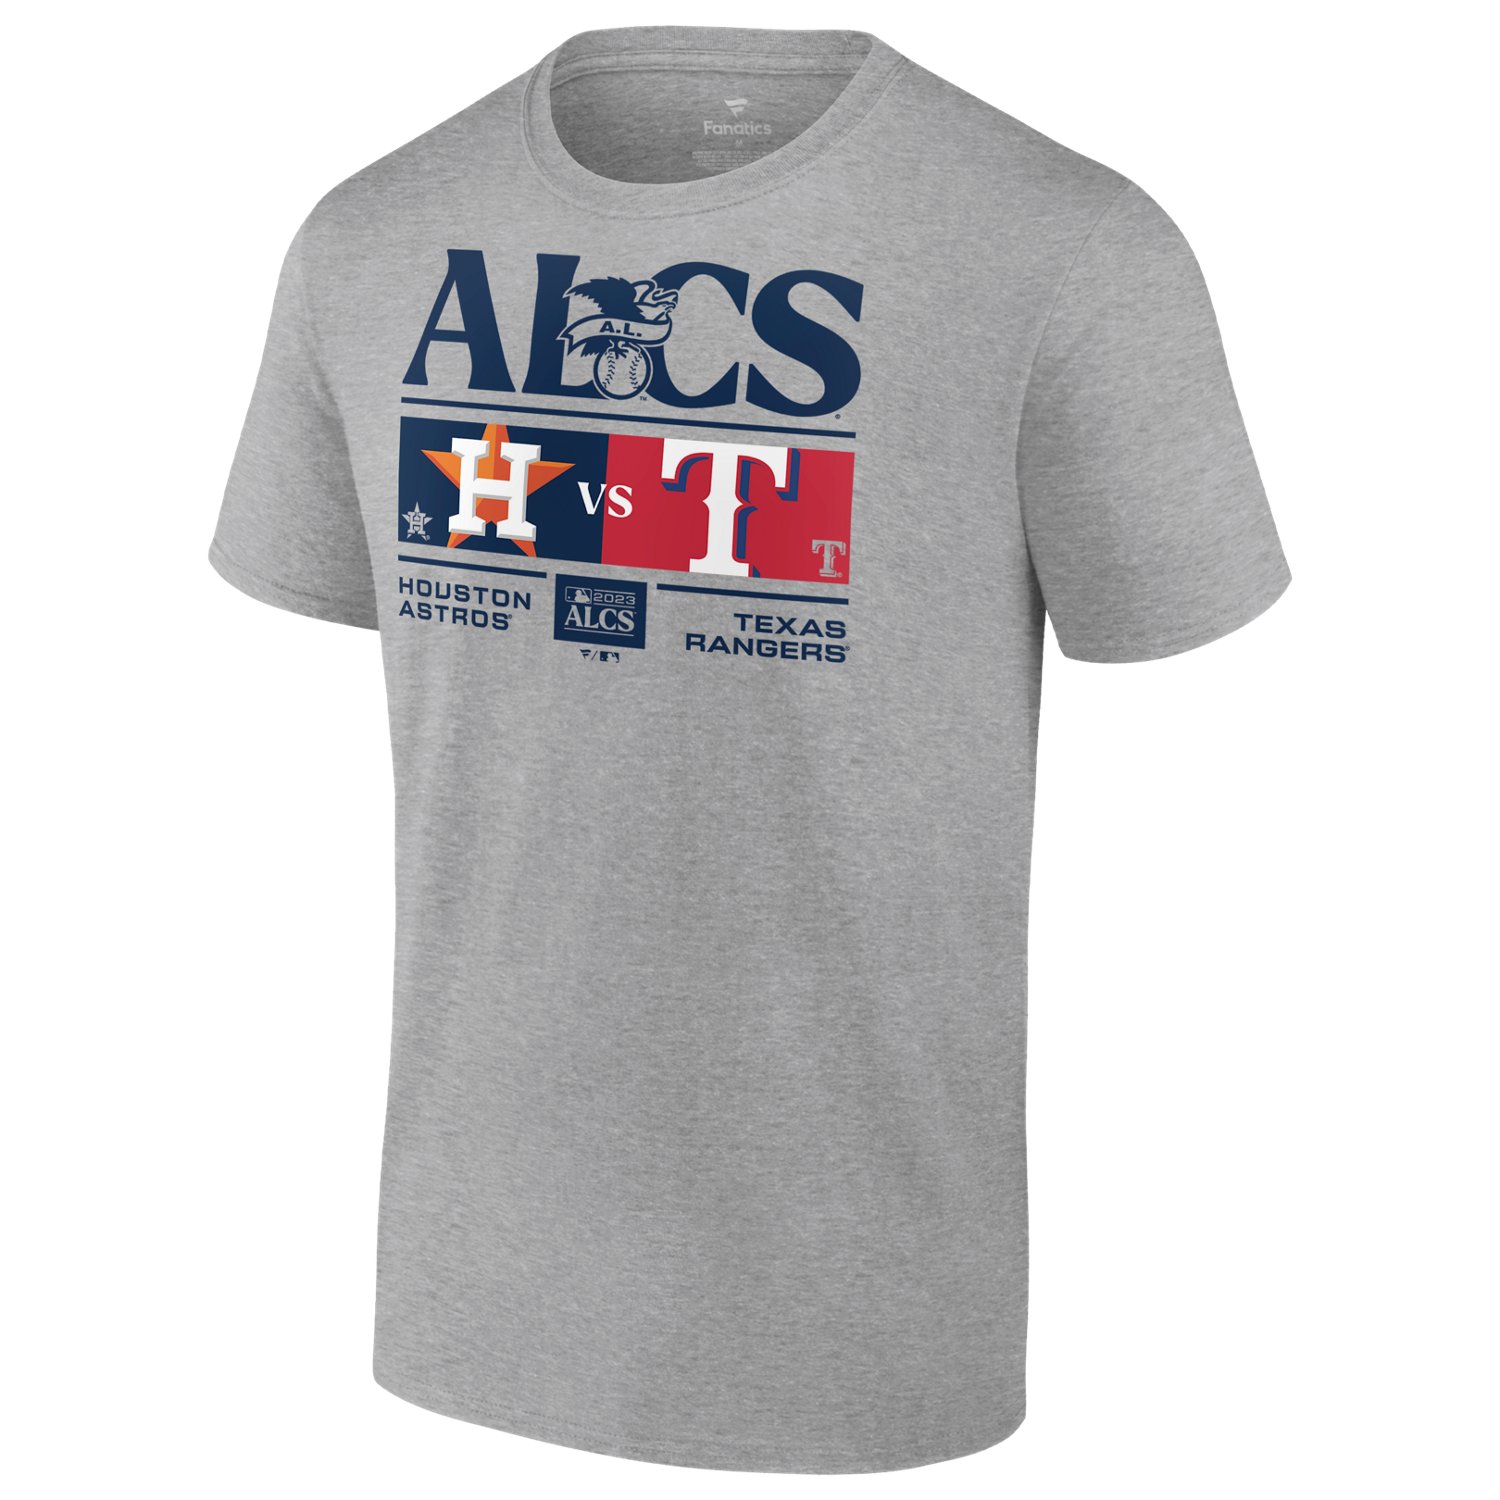 Fanatics Men's Houston Astros 2022 ALCS Champs Locker Room T-shirt